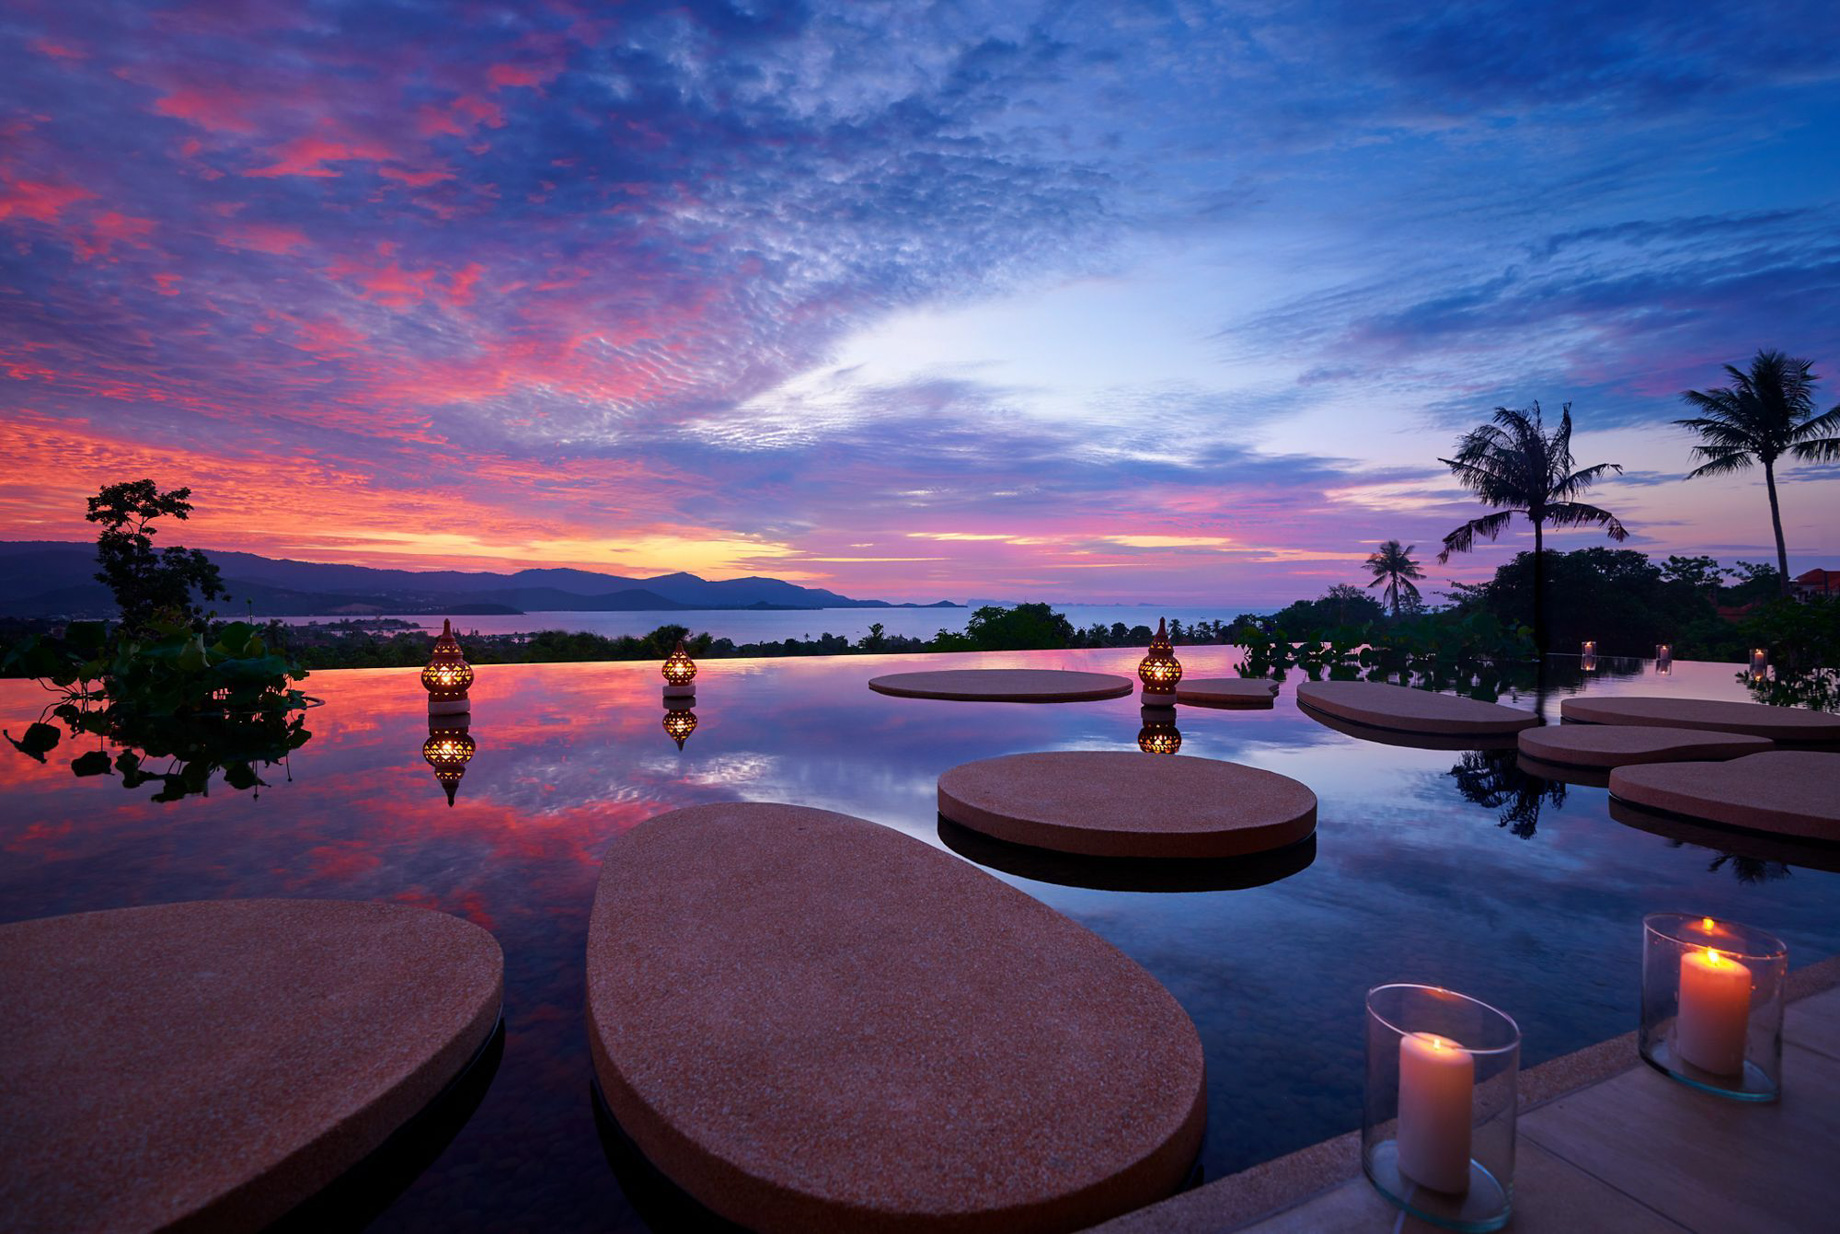 The Ritz-Carlton, Koh Samui Resort - Surat Thani, Thailand - Arrival Pavilion Sunset View